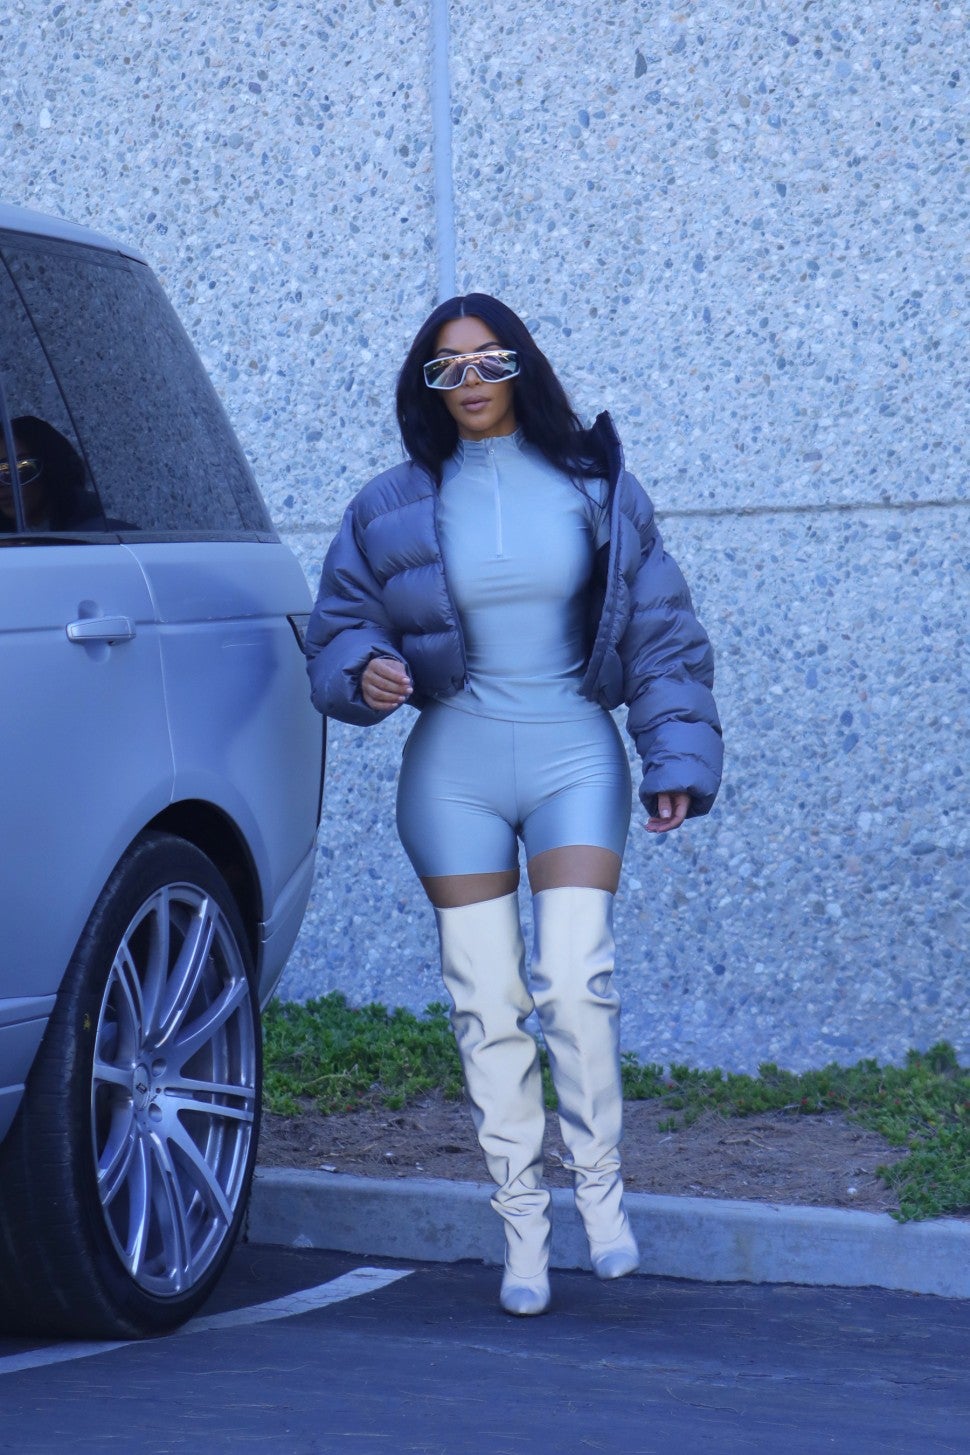 Kim Kardashian in Puffer Jacket and Metallic Boots